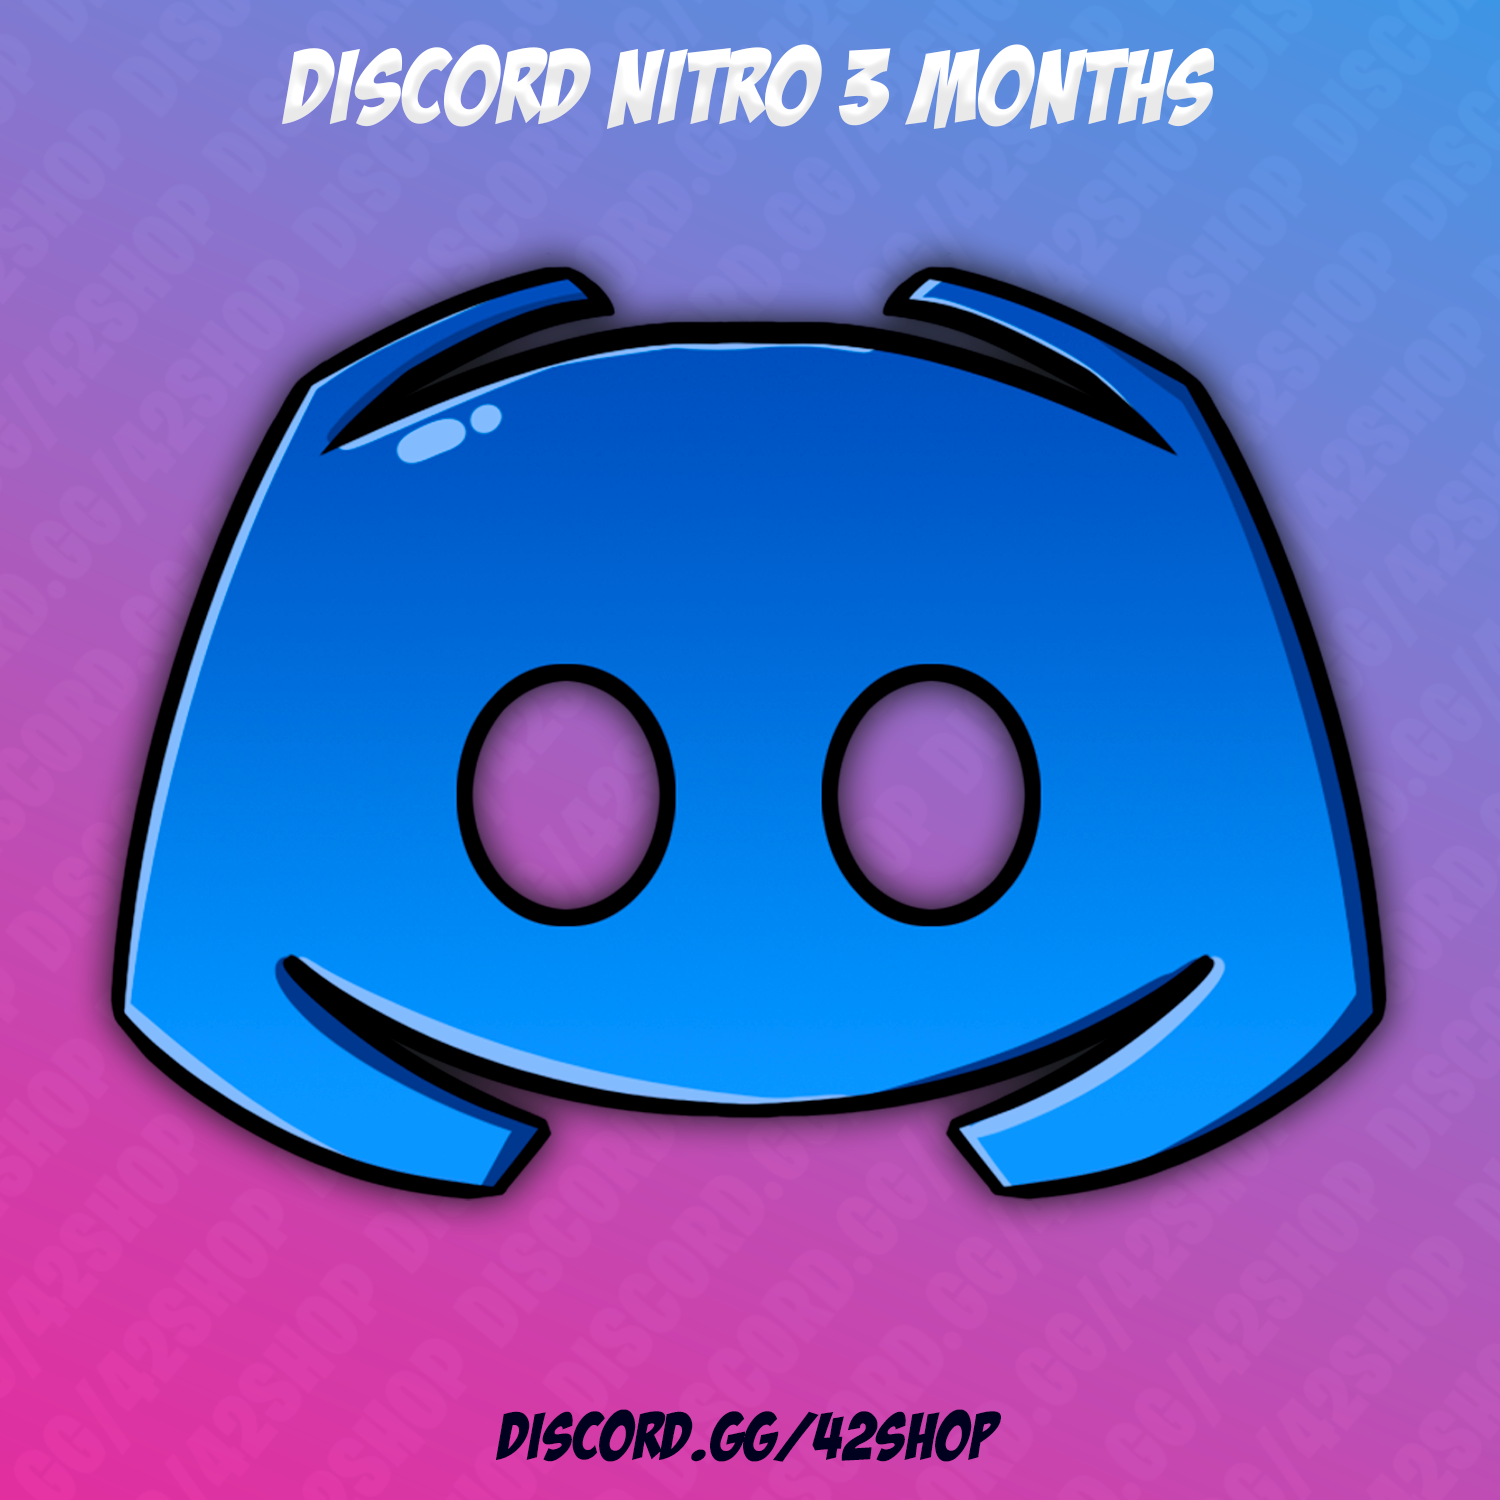 Discord Nitro. Discord Nitro 3 месяца 2 буста. Discord Nitro 3 months. Discord Nitro PNG. Купить дискорд нитро на месяц